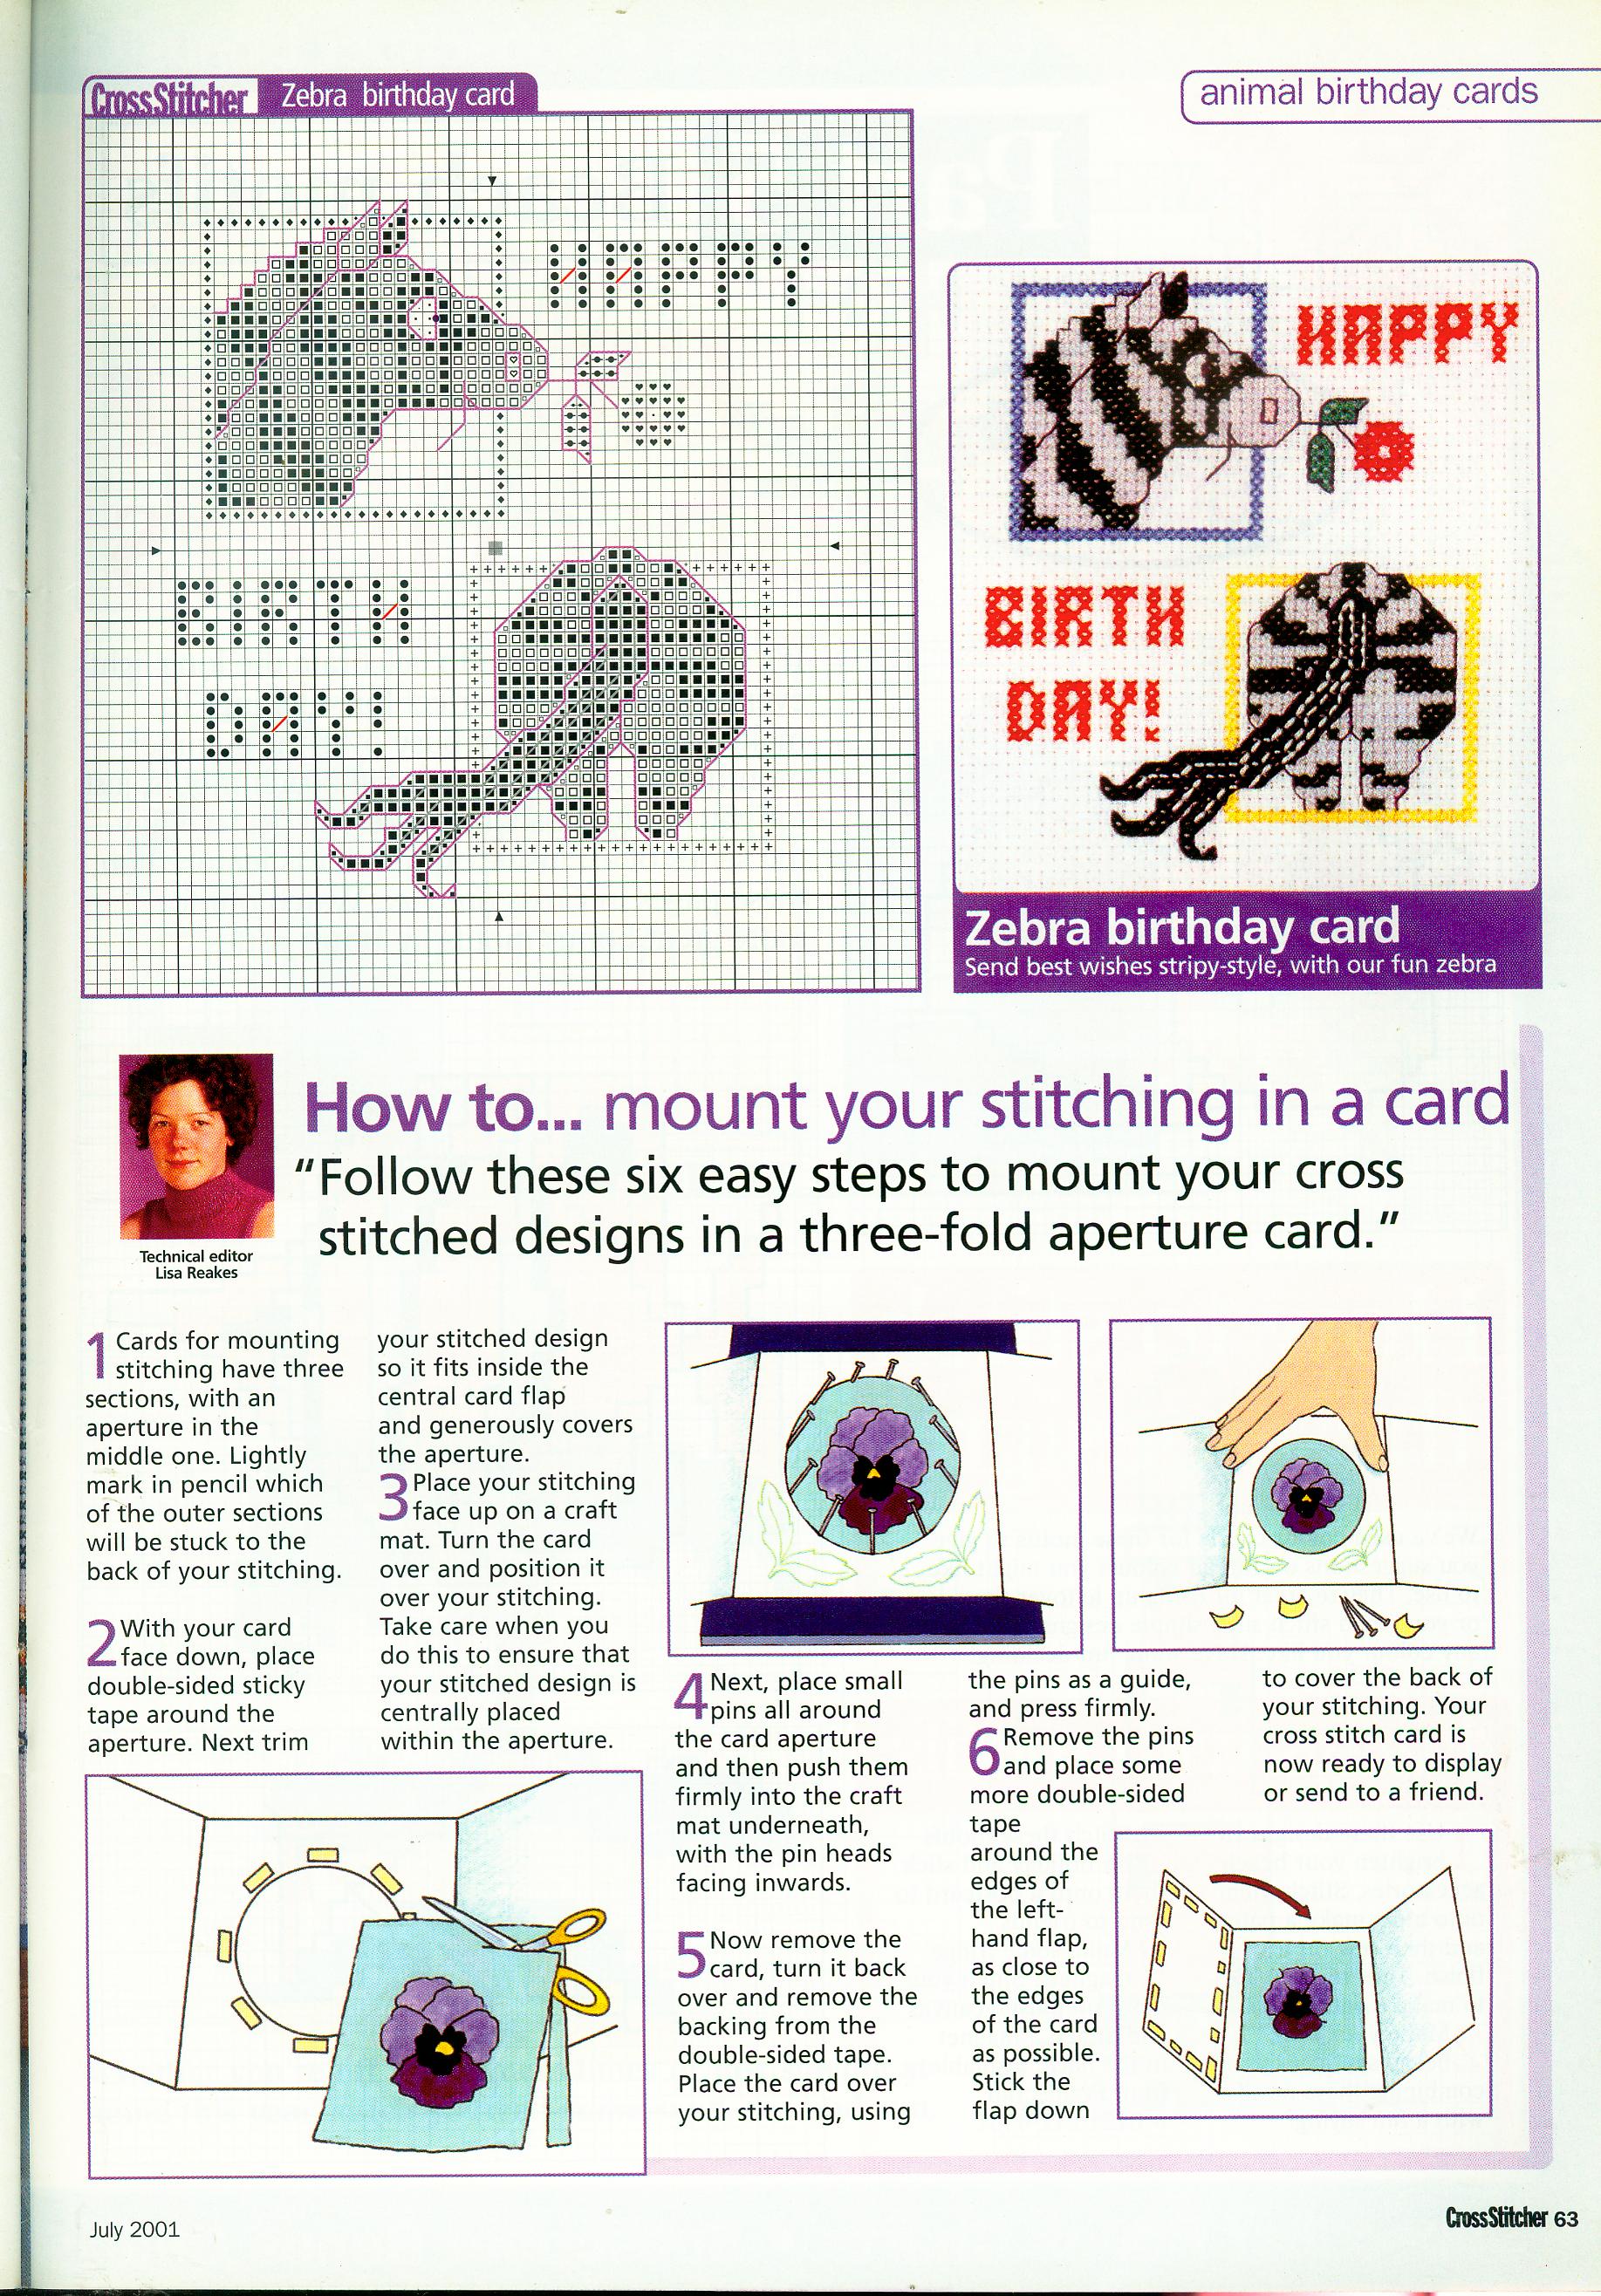 Animals birthday cards cross stitch pattern (5)